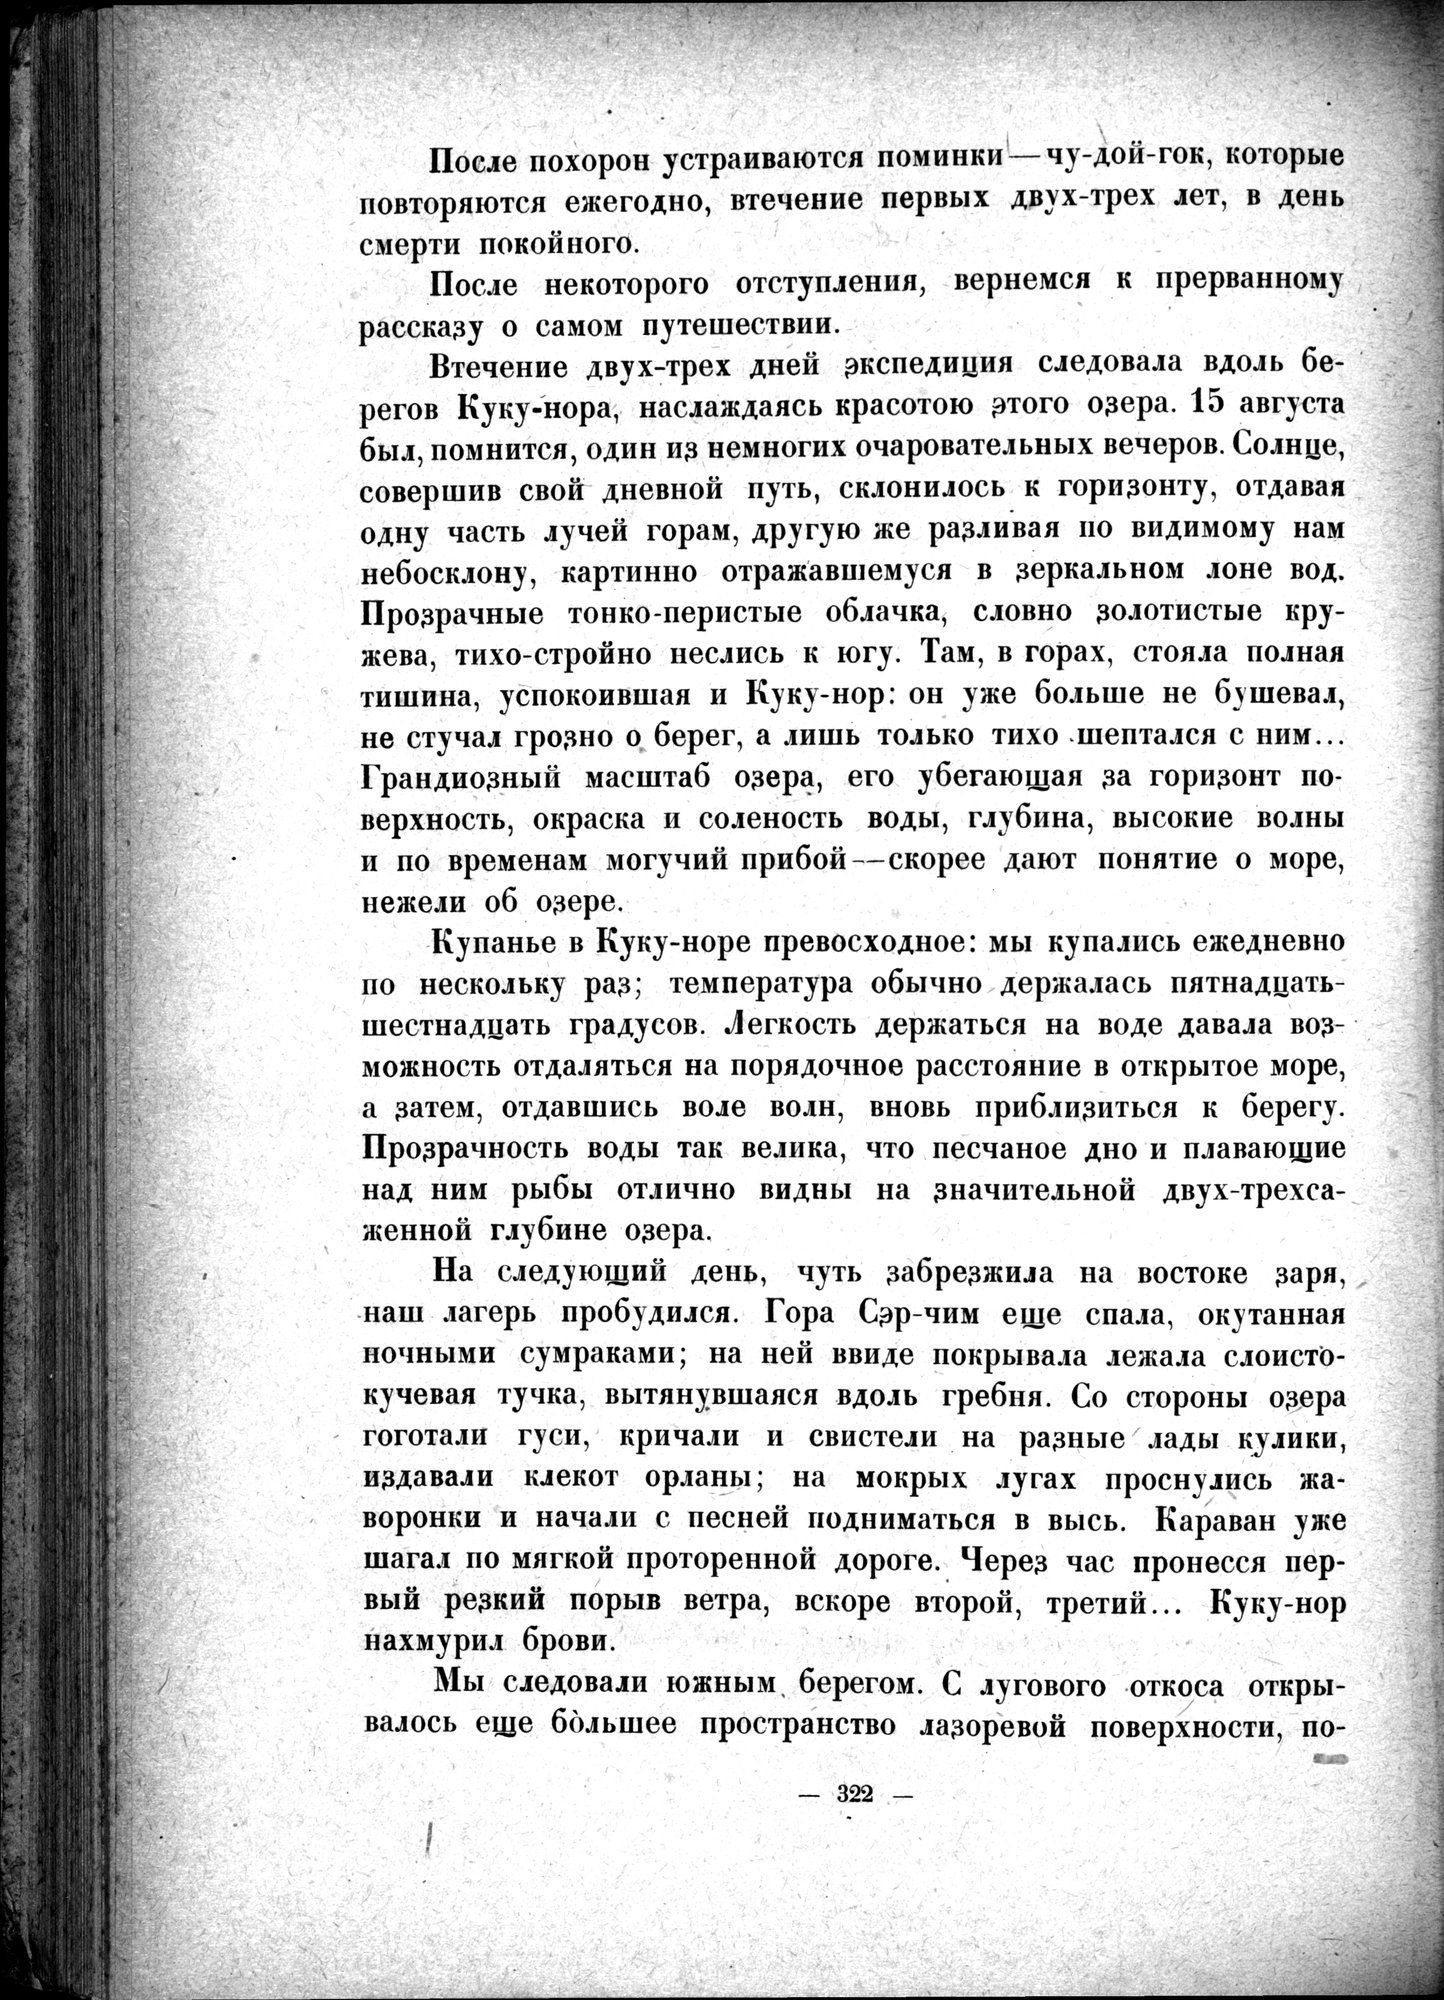 Mongoliya i Amdo i mertby gorod Khara-Khoto : vol.1 / Page 372 (Grayscale High Resolution Image)